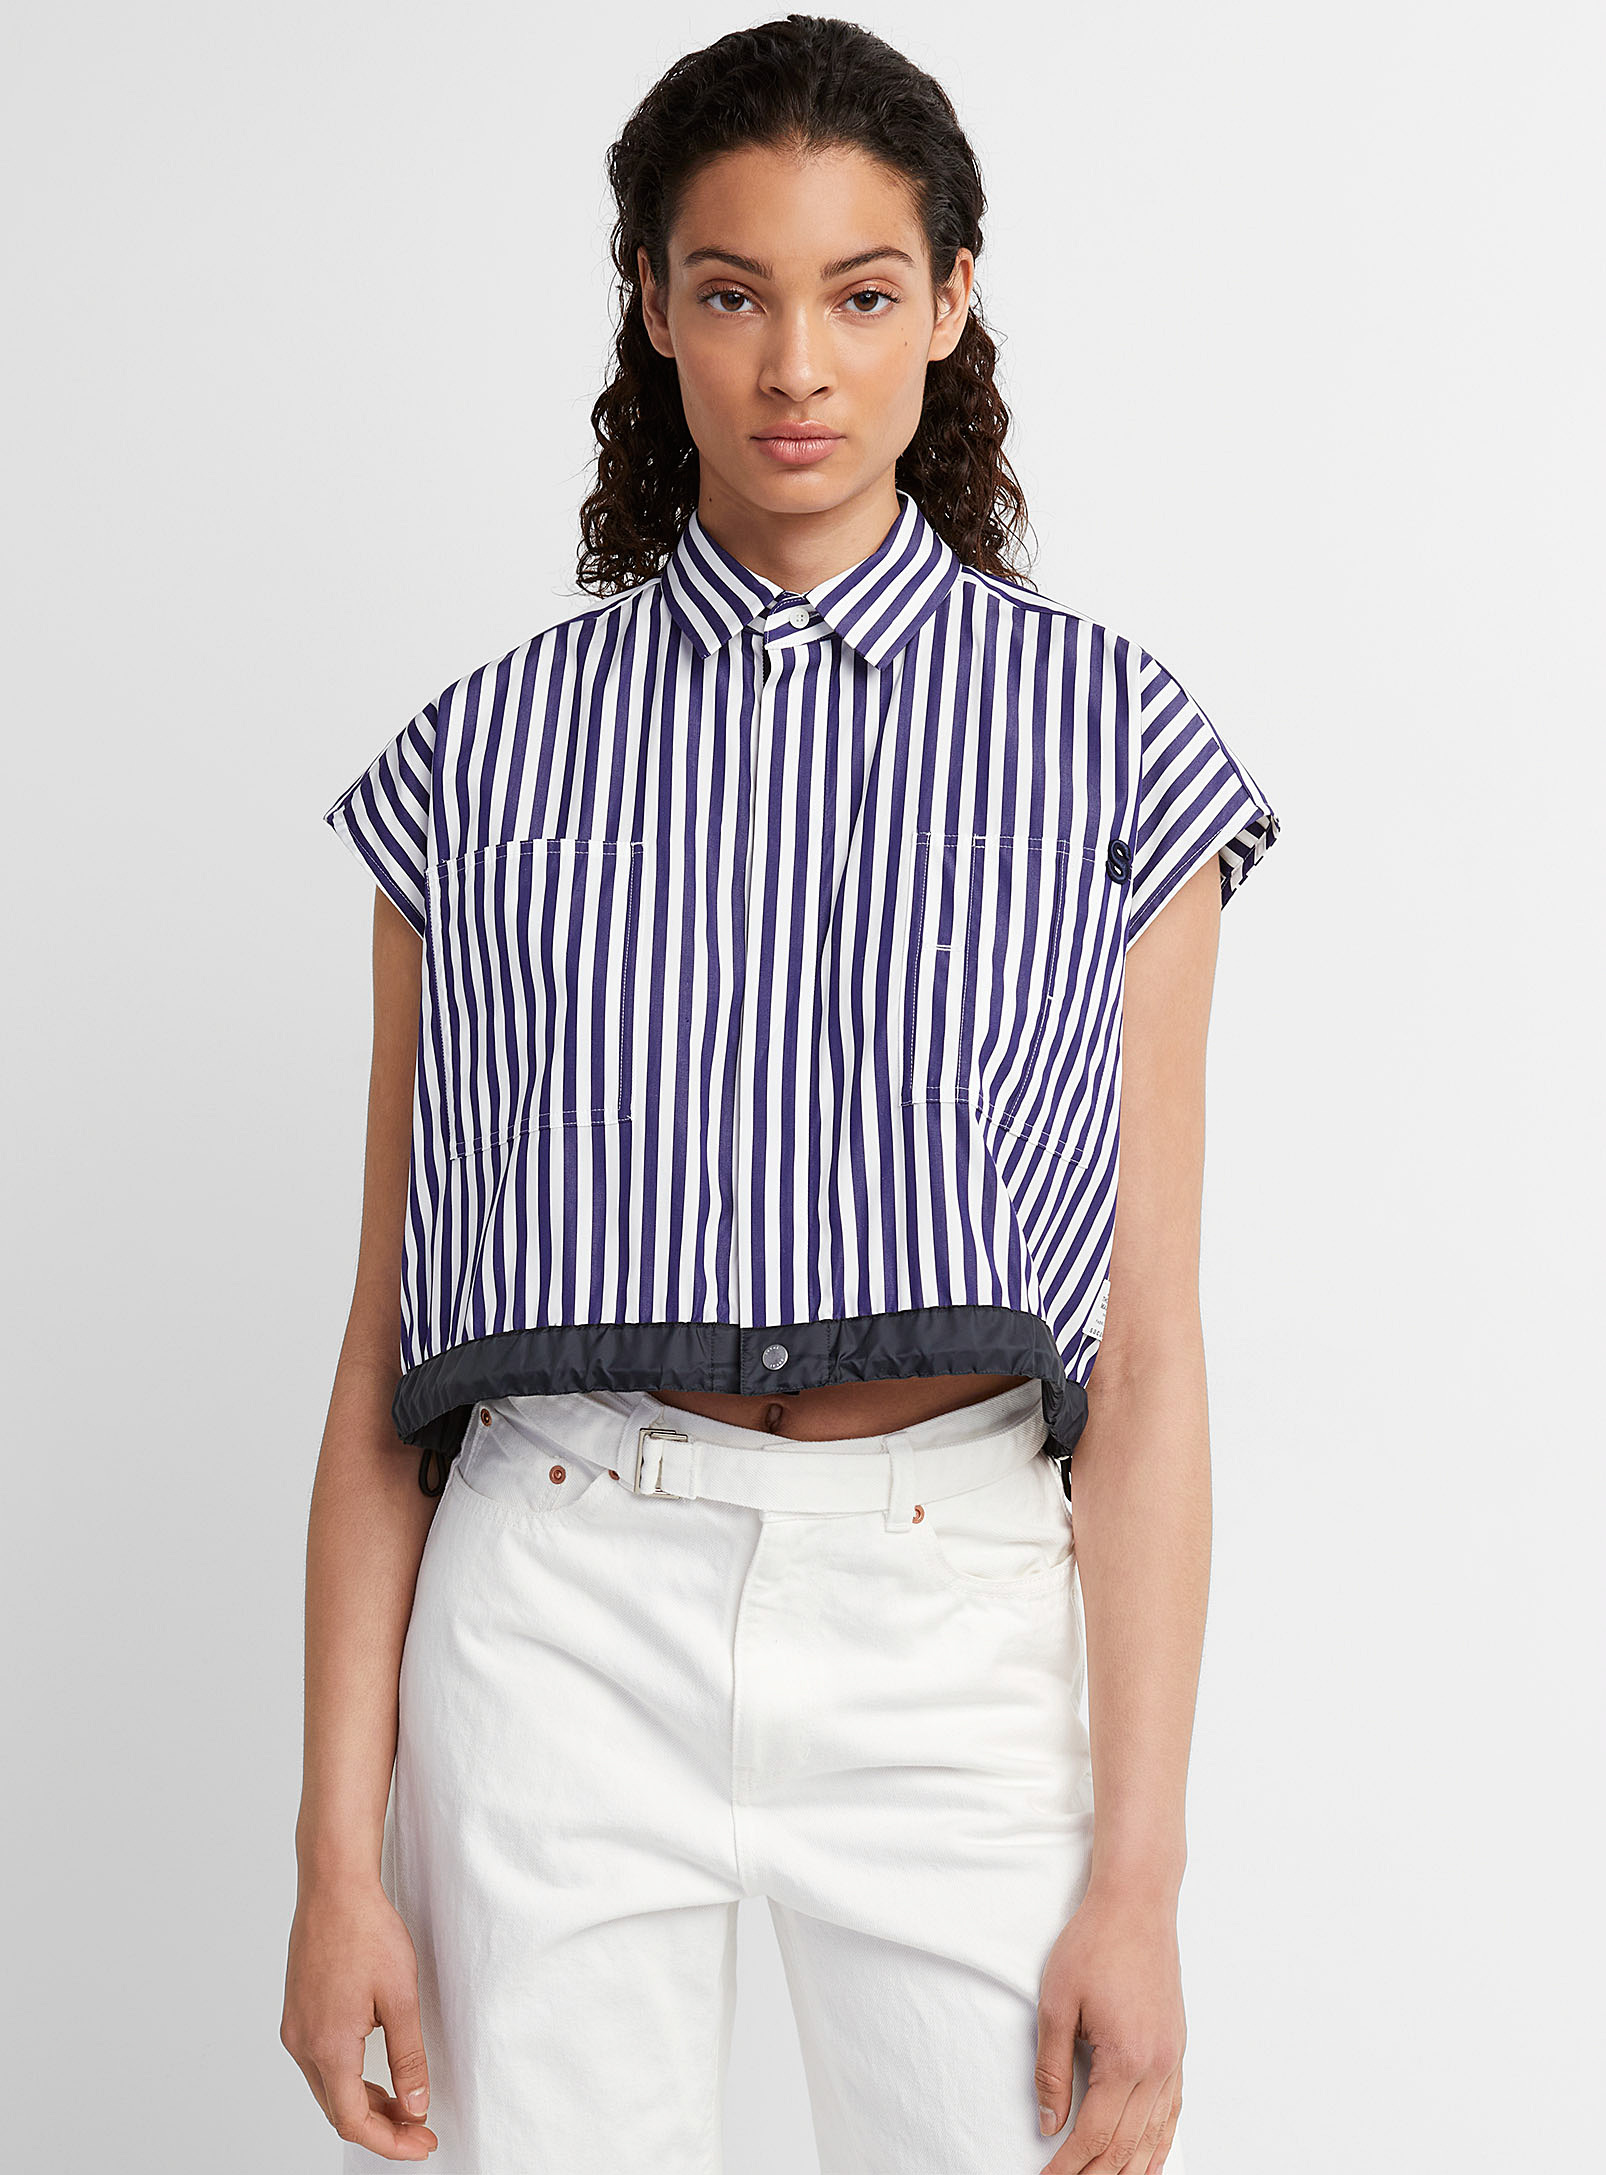 Sacai - Women's Embroidered S striped shirt